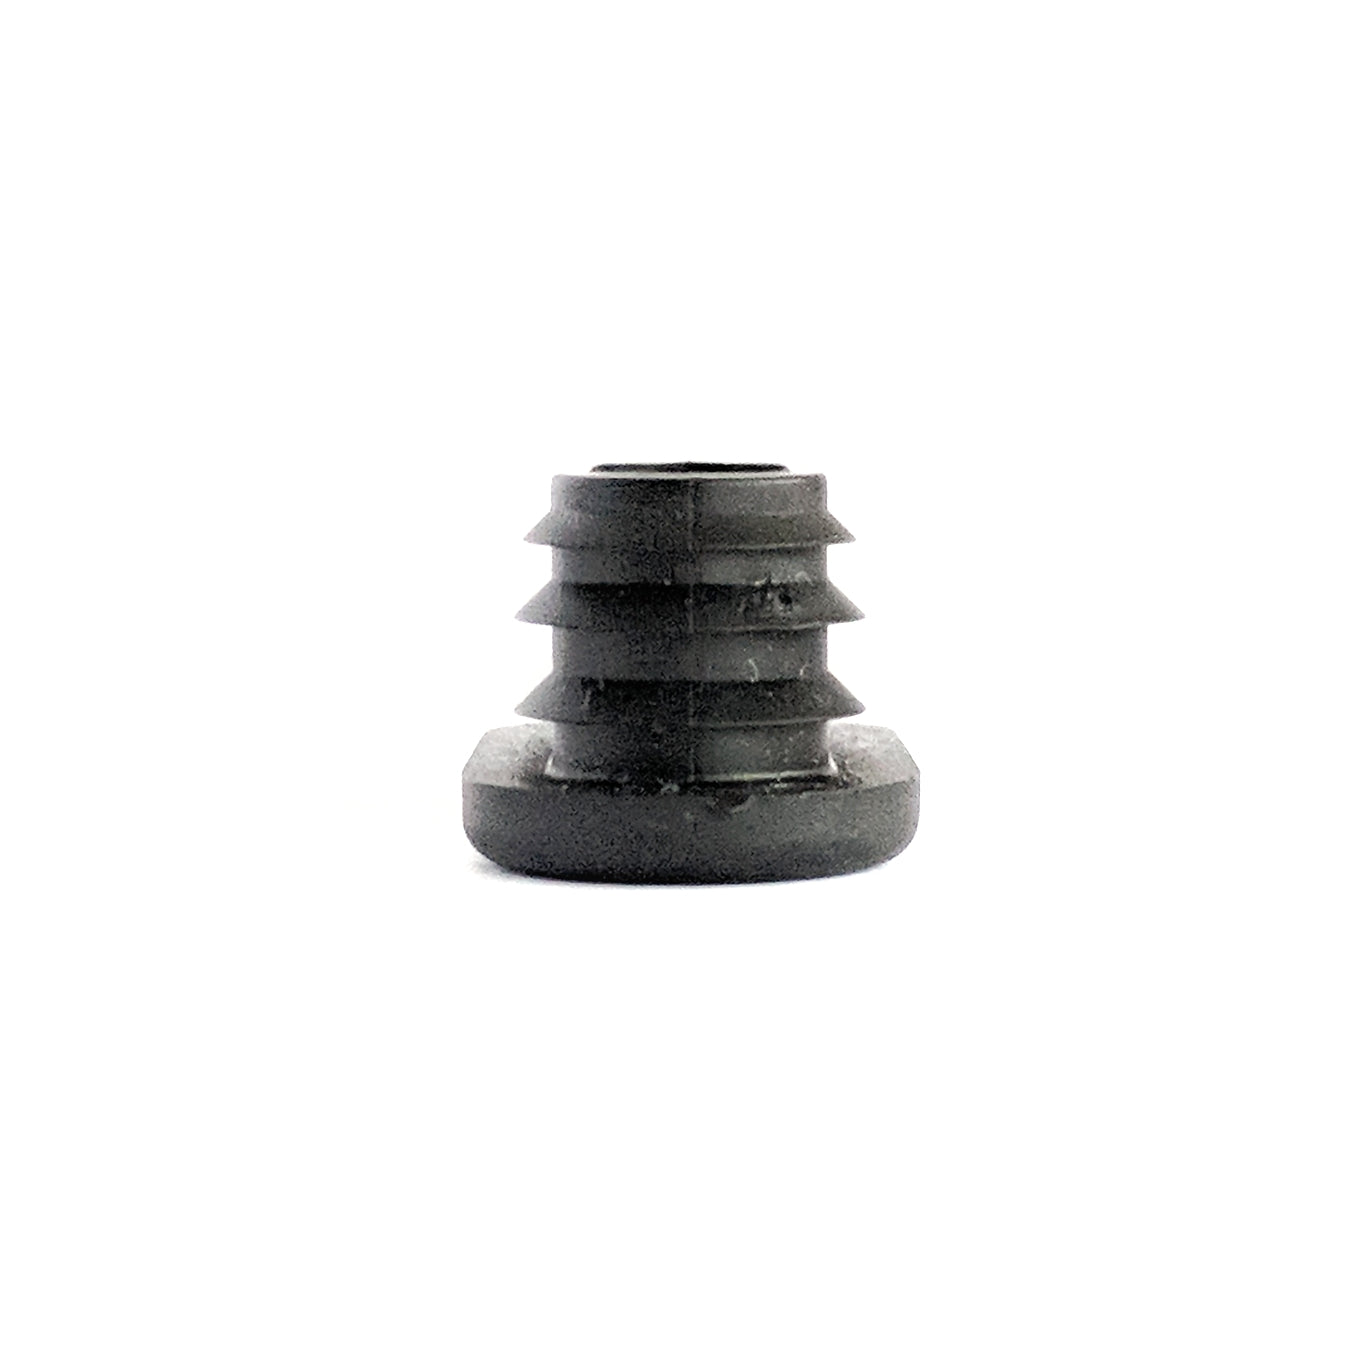 Oval Tube Inserts 30mm x 15mm B | Made in Germany | Keay Vital Parts - Keay Vital Parts